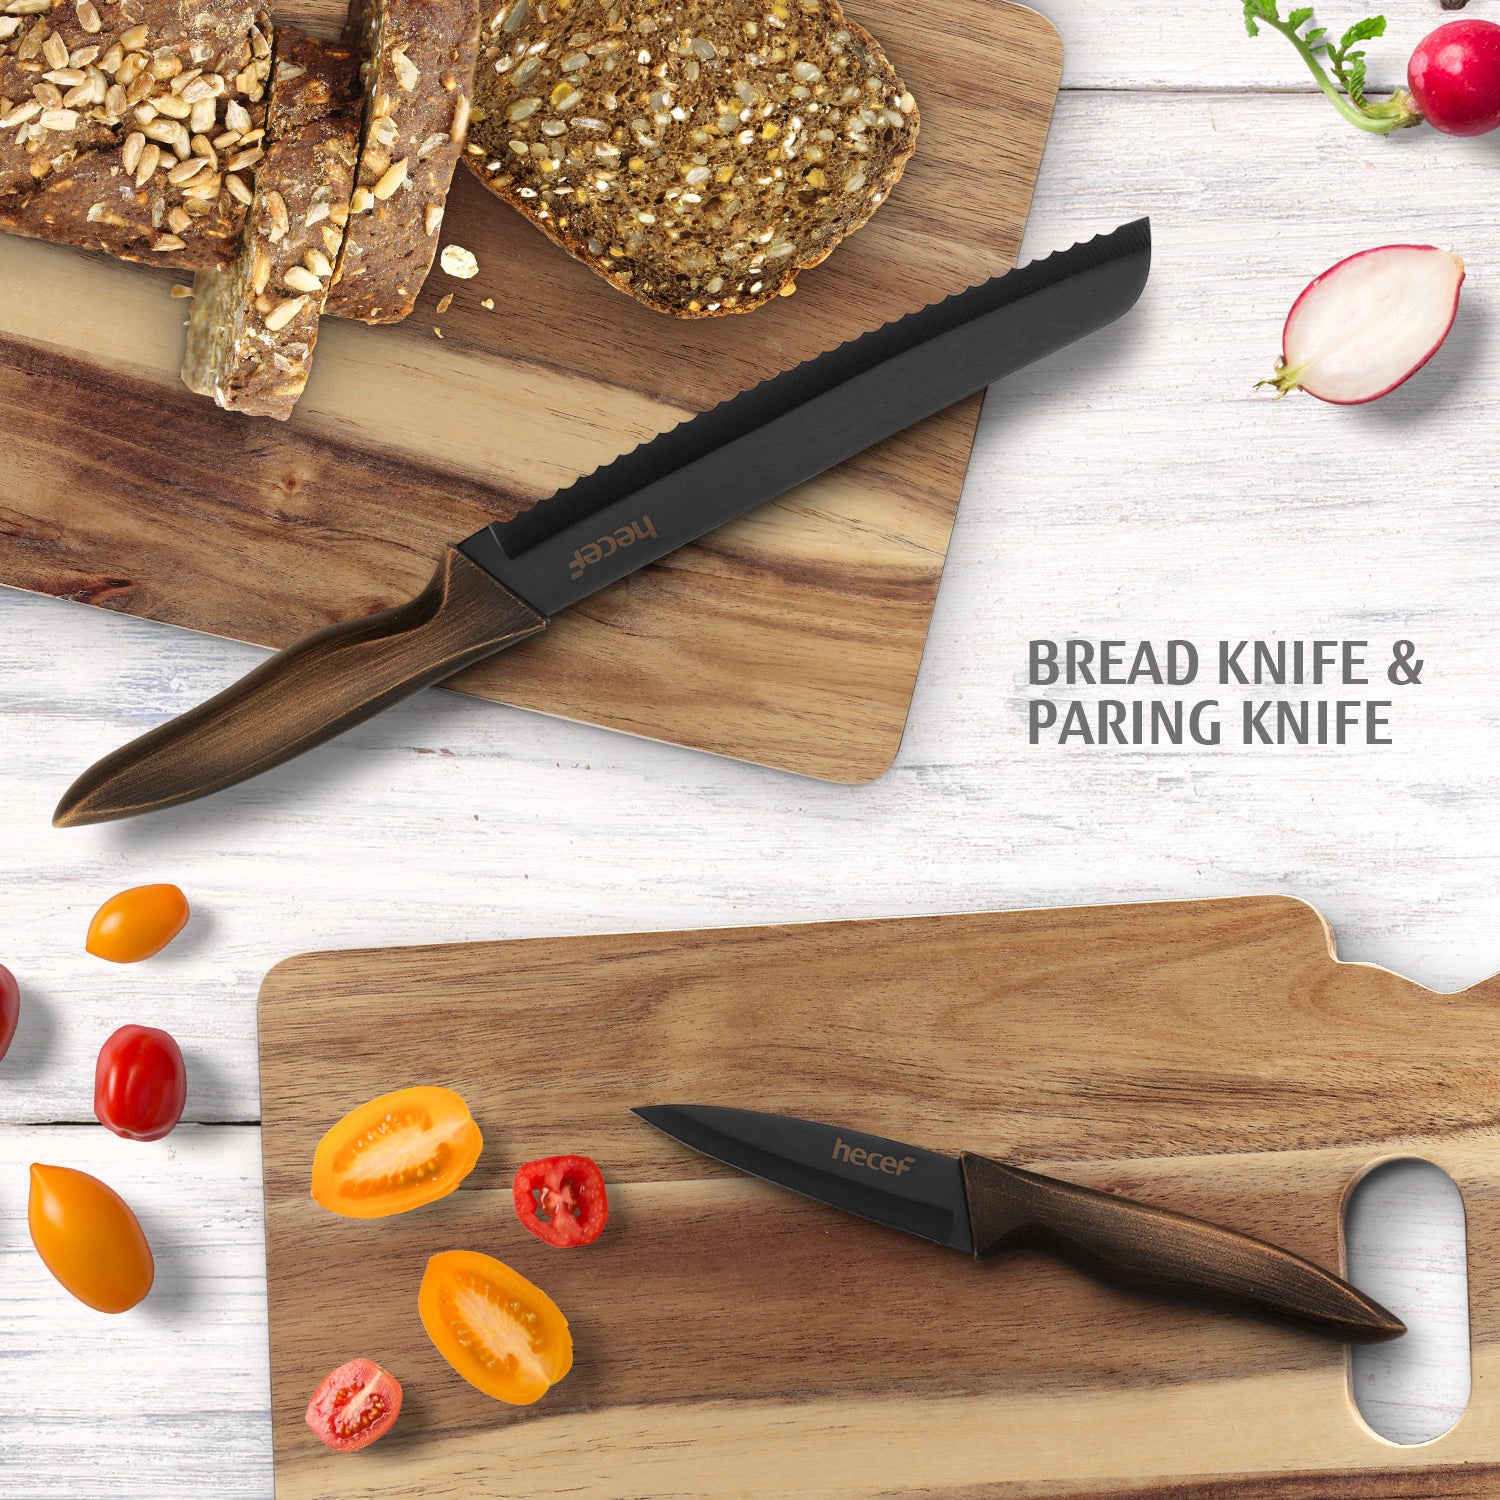 hecef Vintage Kitchen Knife Set, Stainless Steel Non-stick Black Coate —  CHIMIYA